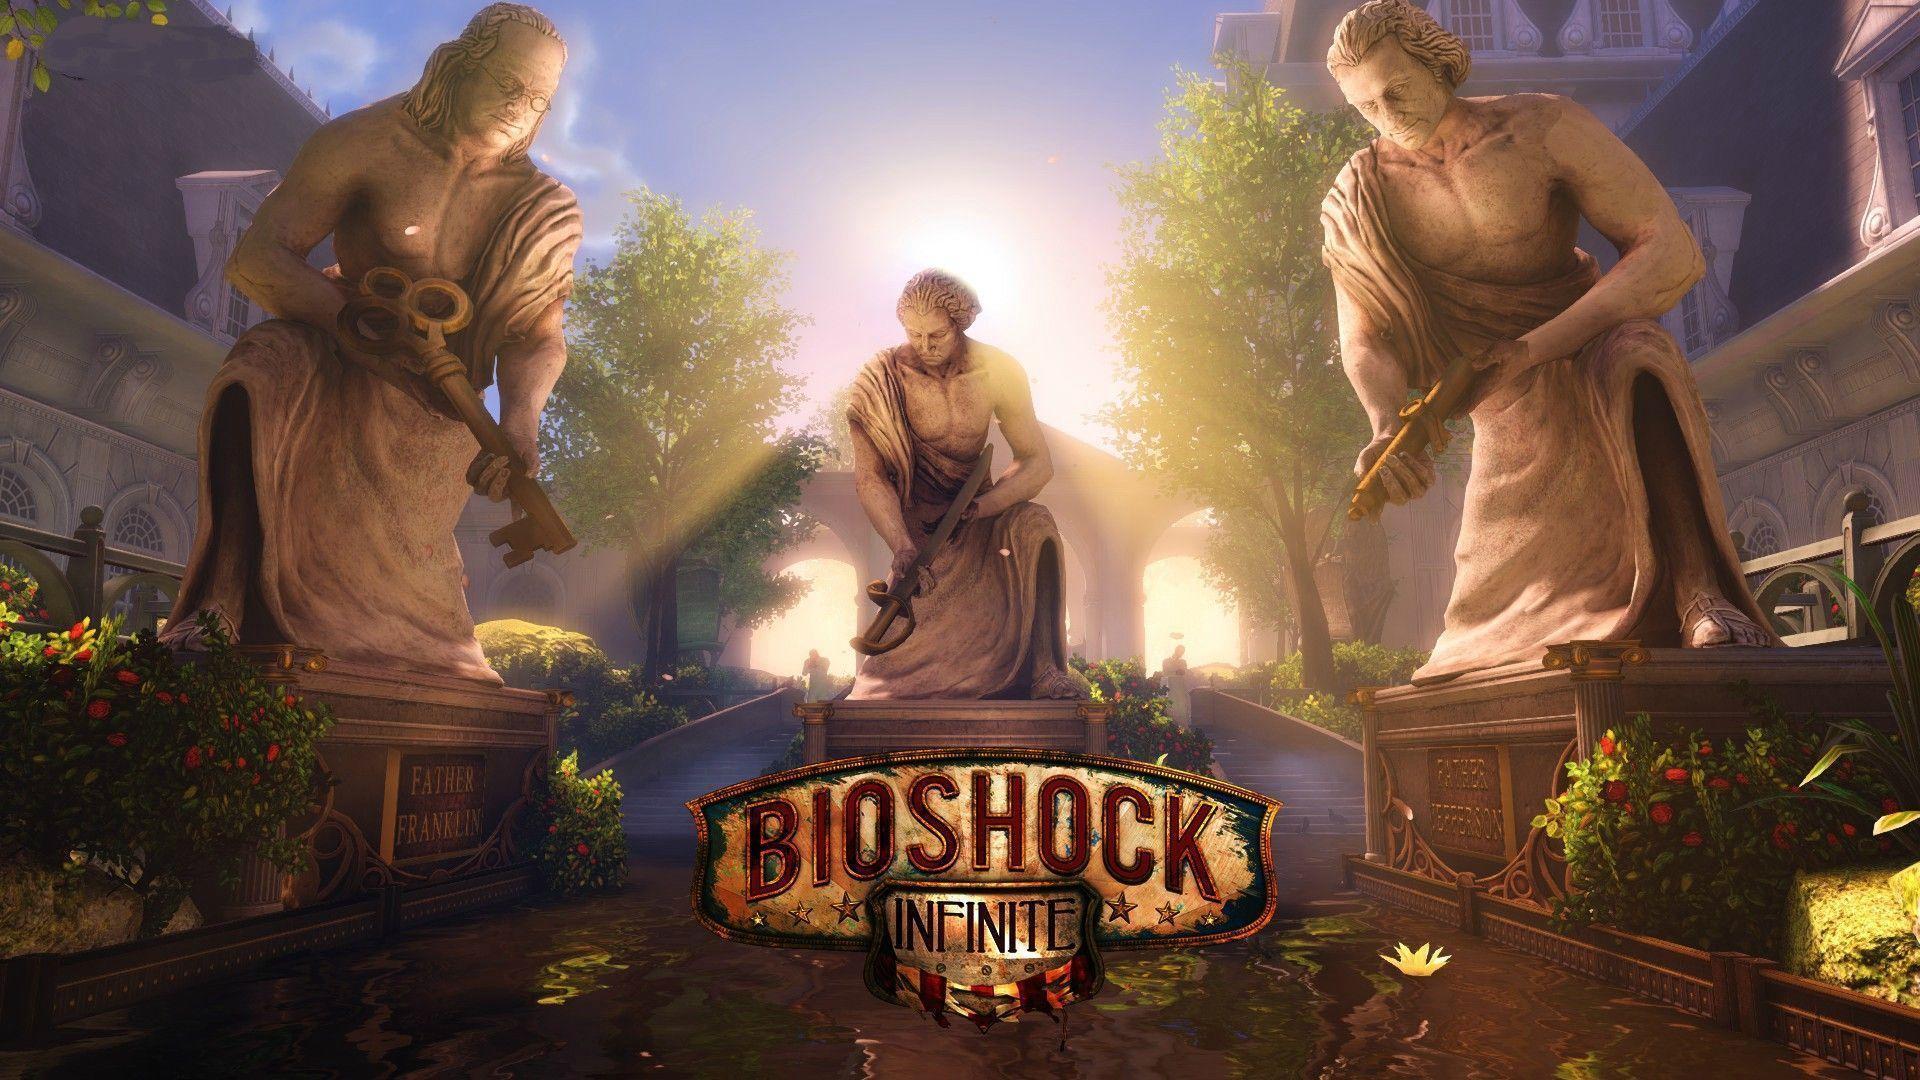 image For > Bioshock Infinite HD Wallpaper 1080p